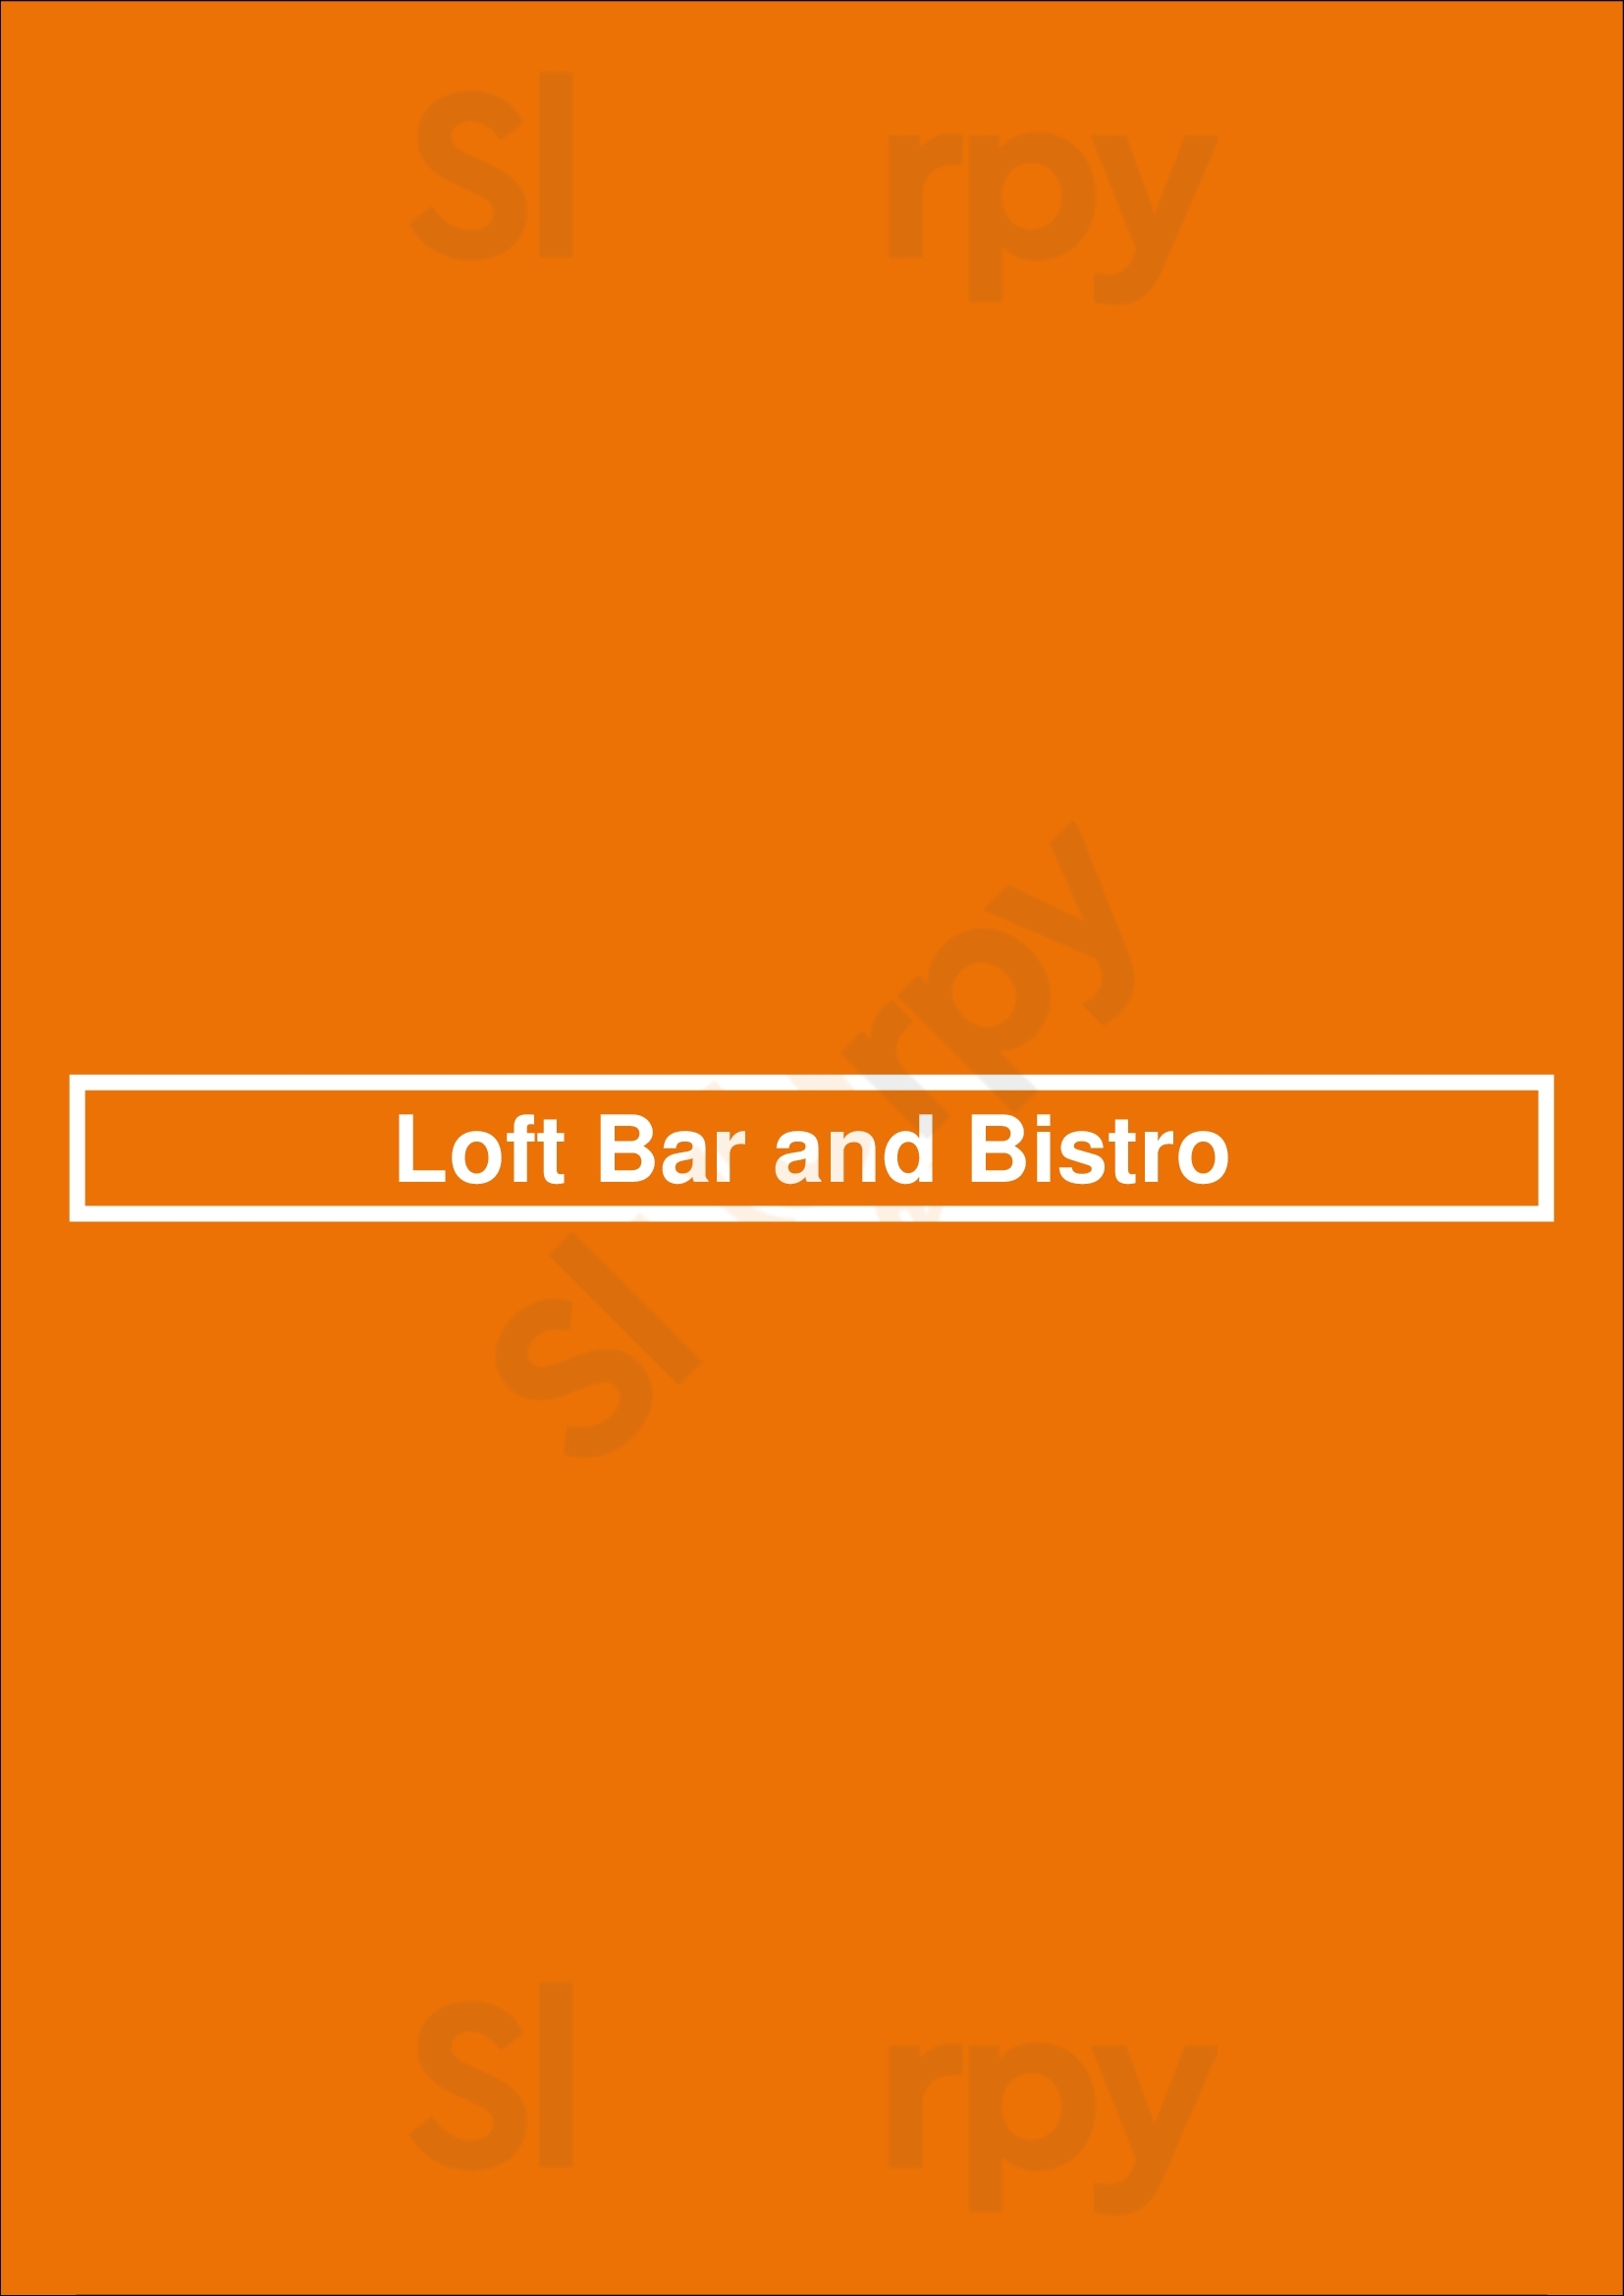 Loft Bar And Bistro San Jose Menu - 1